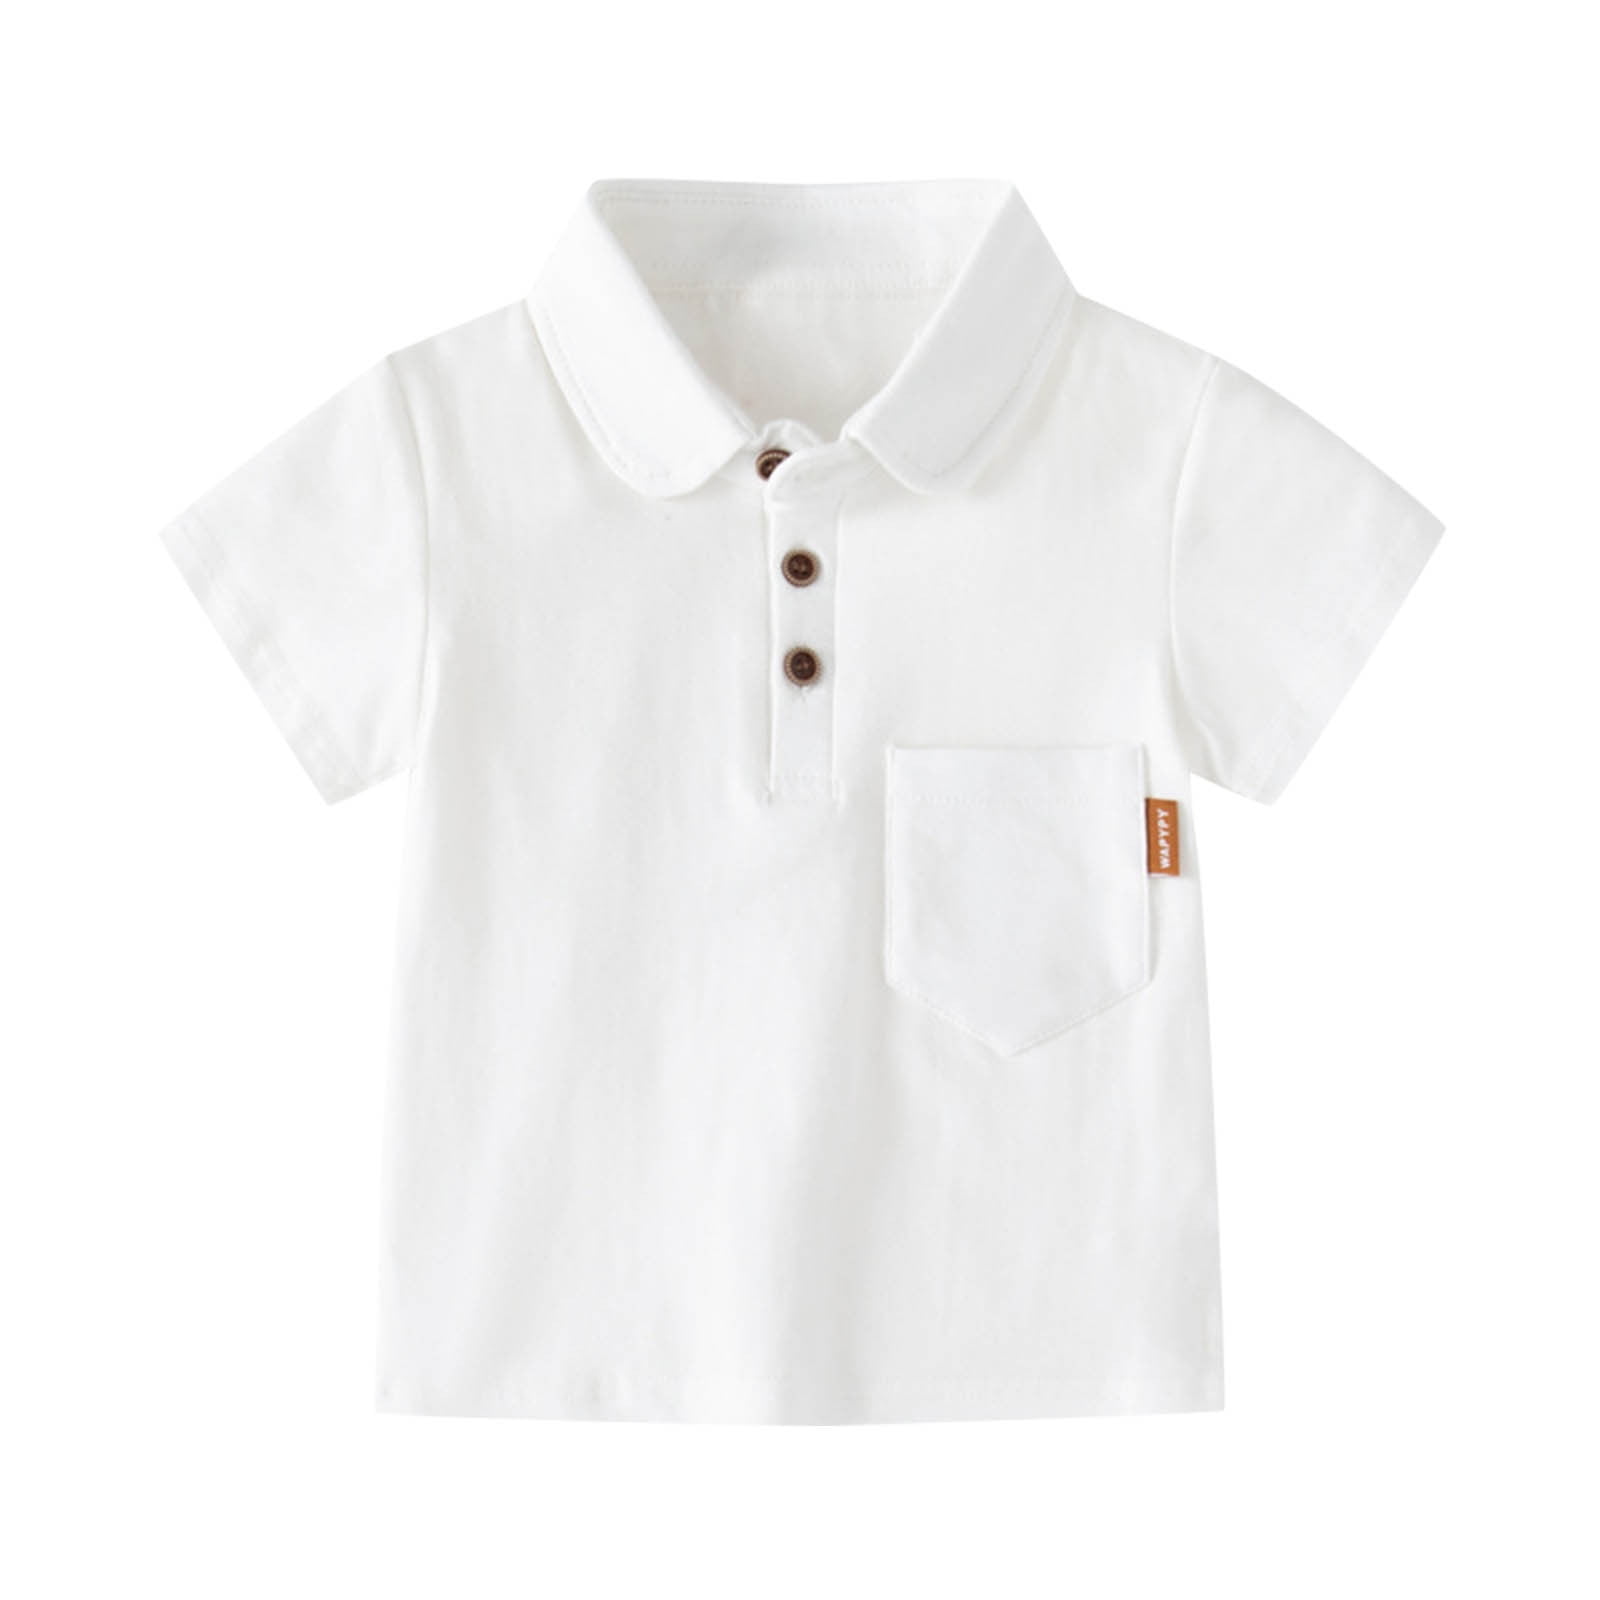 Akiihool Polo Shirts for Boys Toddler Boys Collared Short Sleeve Polo ...